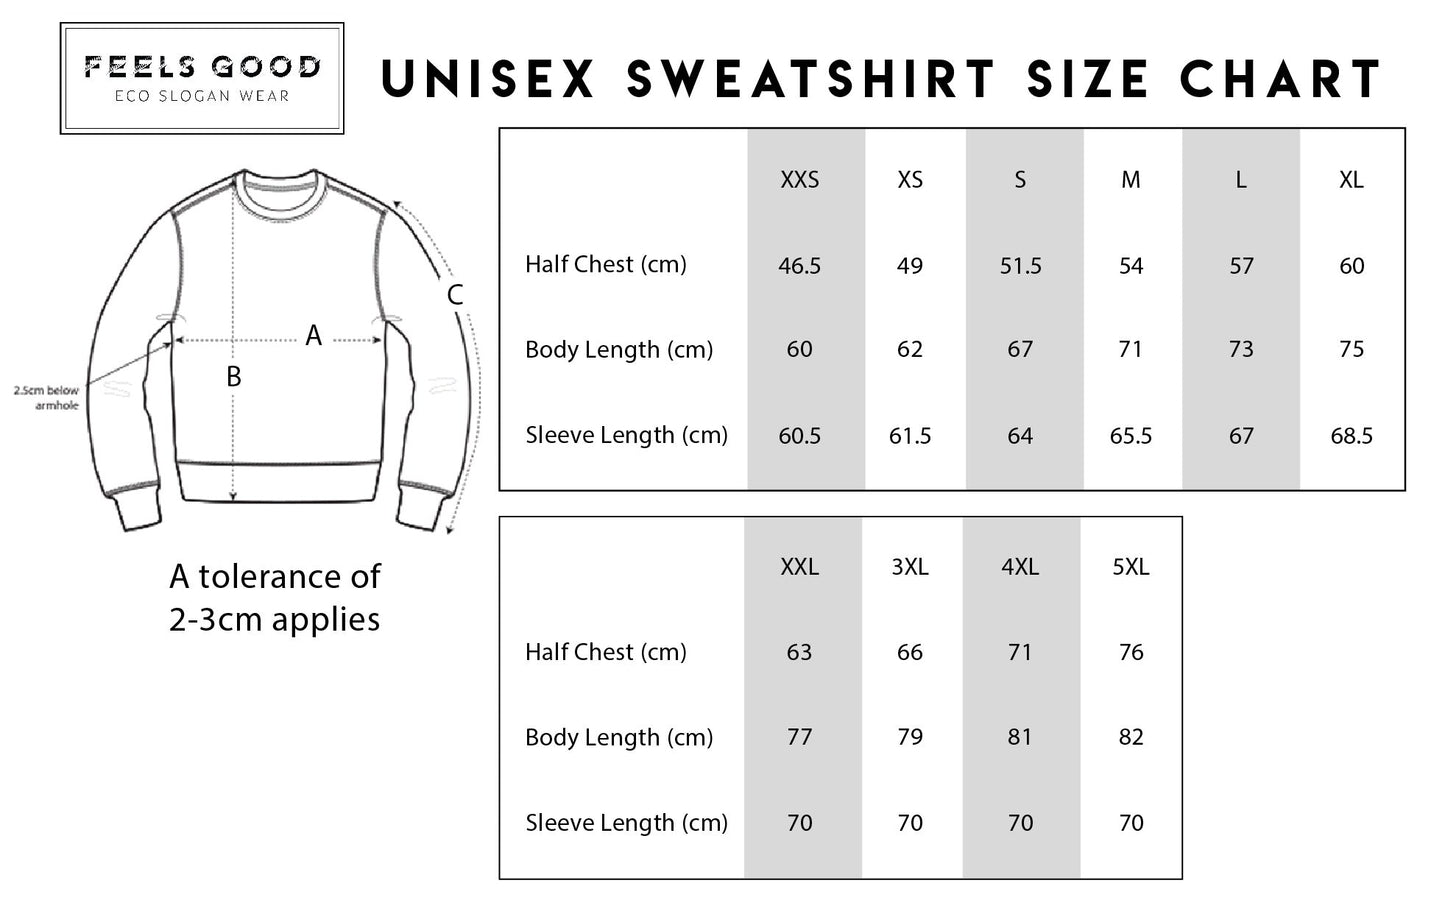 Feminist 'Connected' Organic Cotton Sweatshirt - Equality Sweatshirt